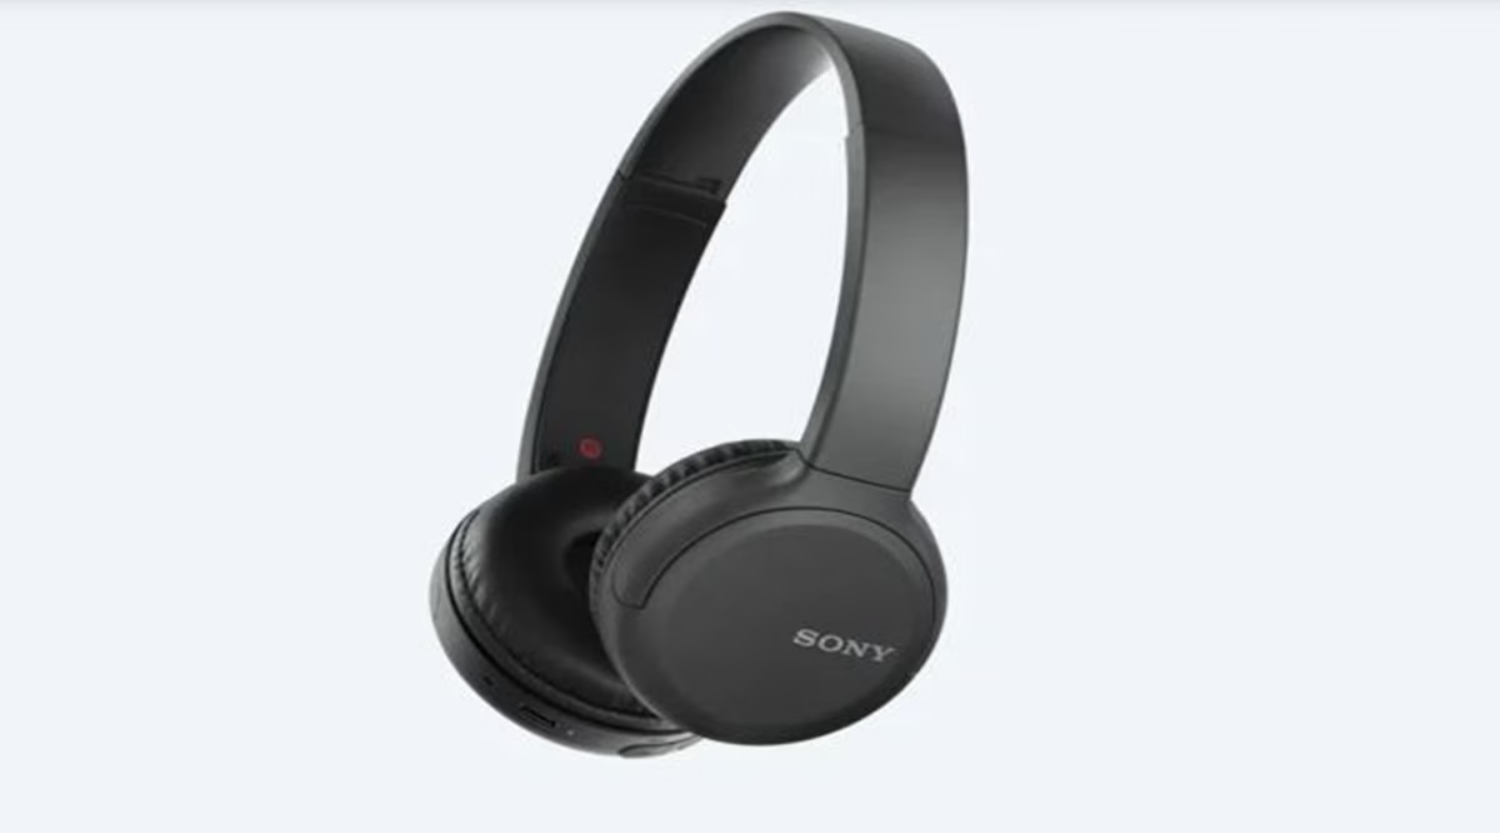 Sony Audio Days 2022 sale: Best offers on headphones, earphones and speakers